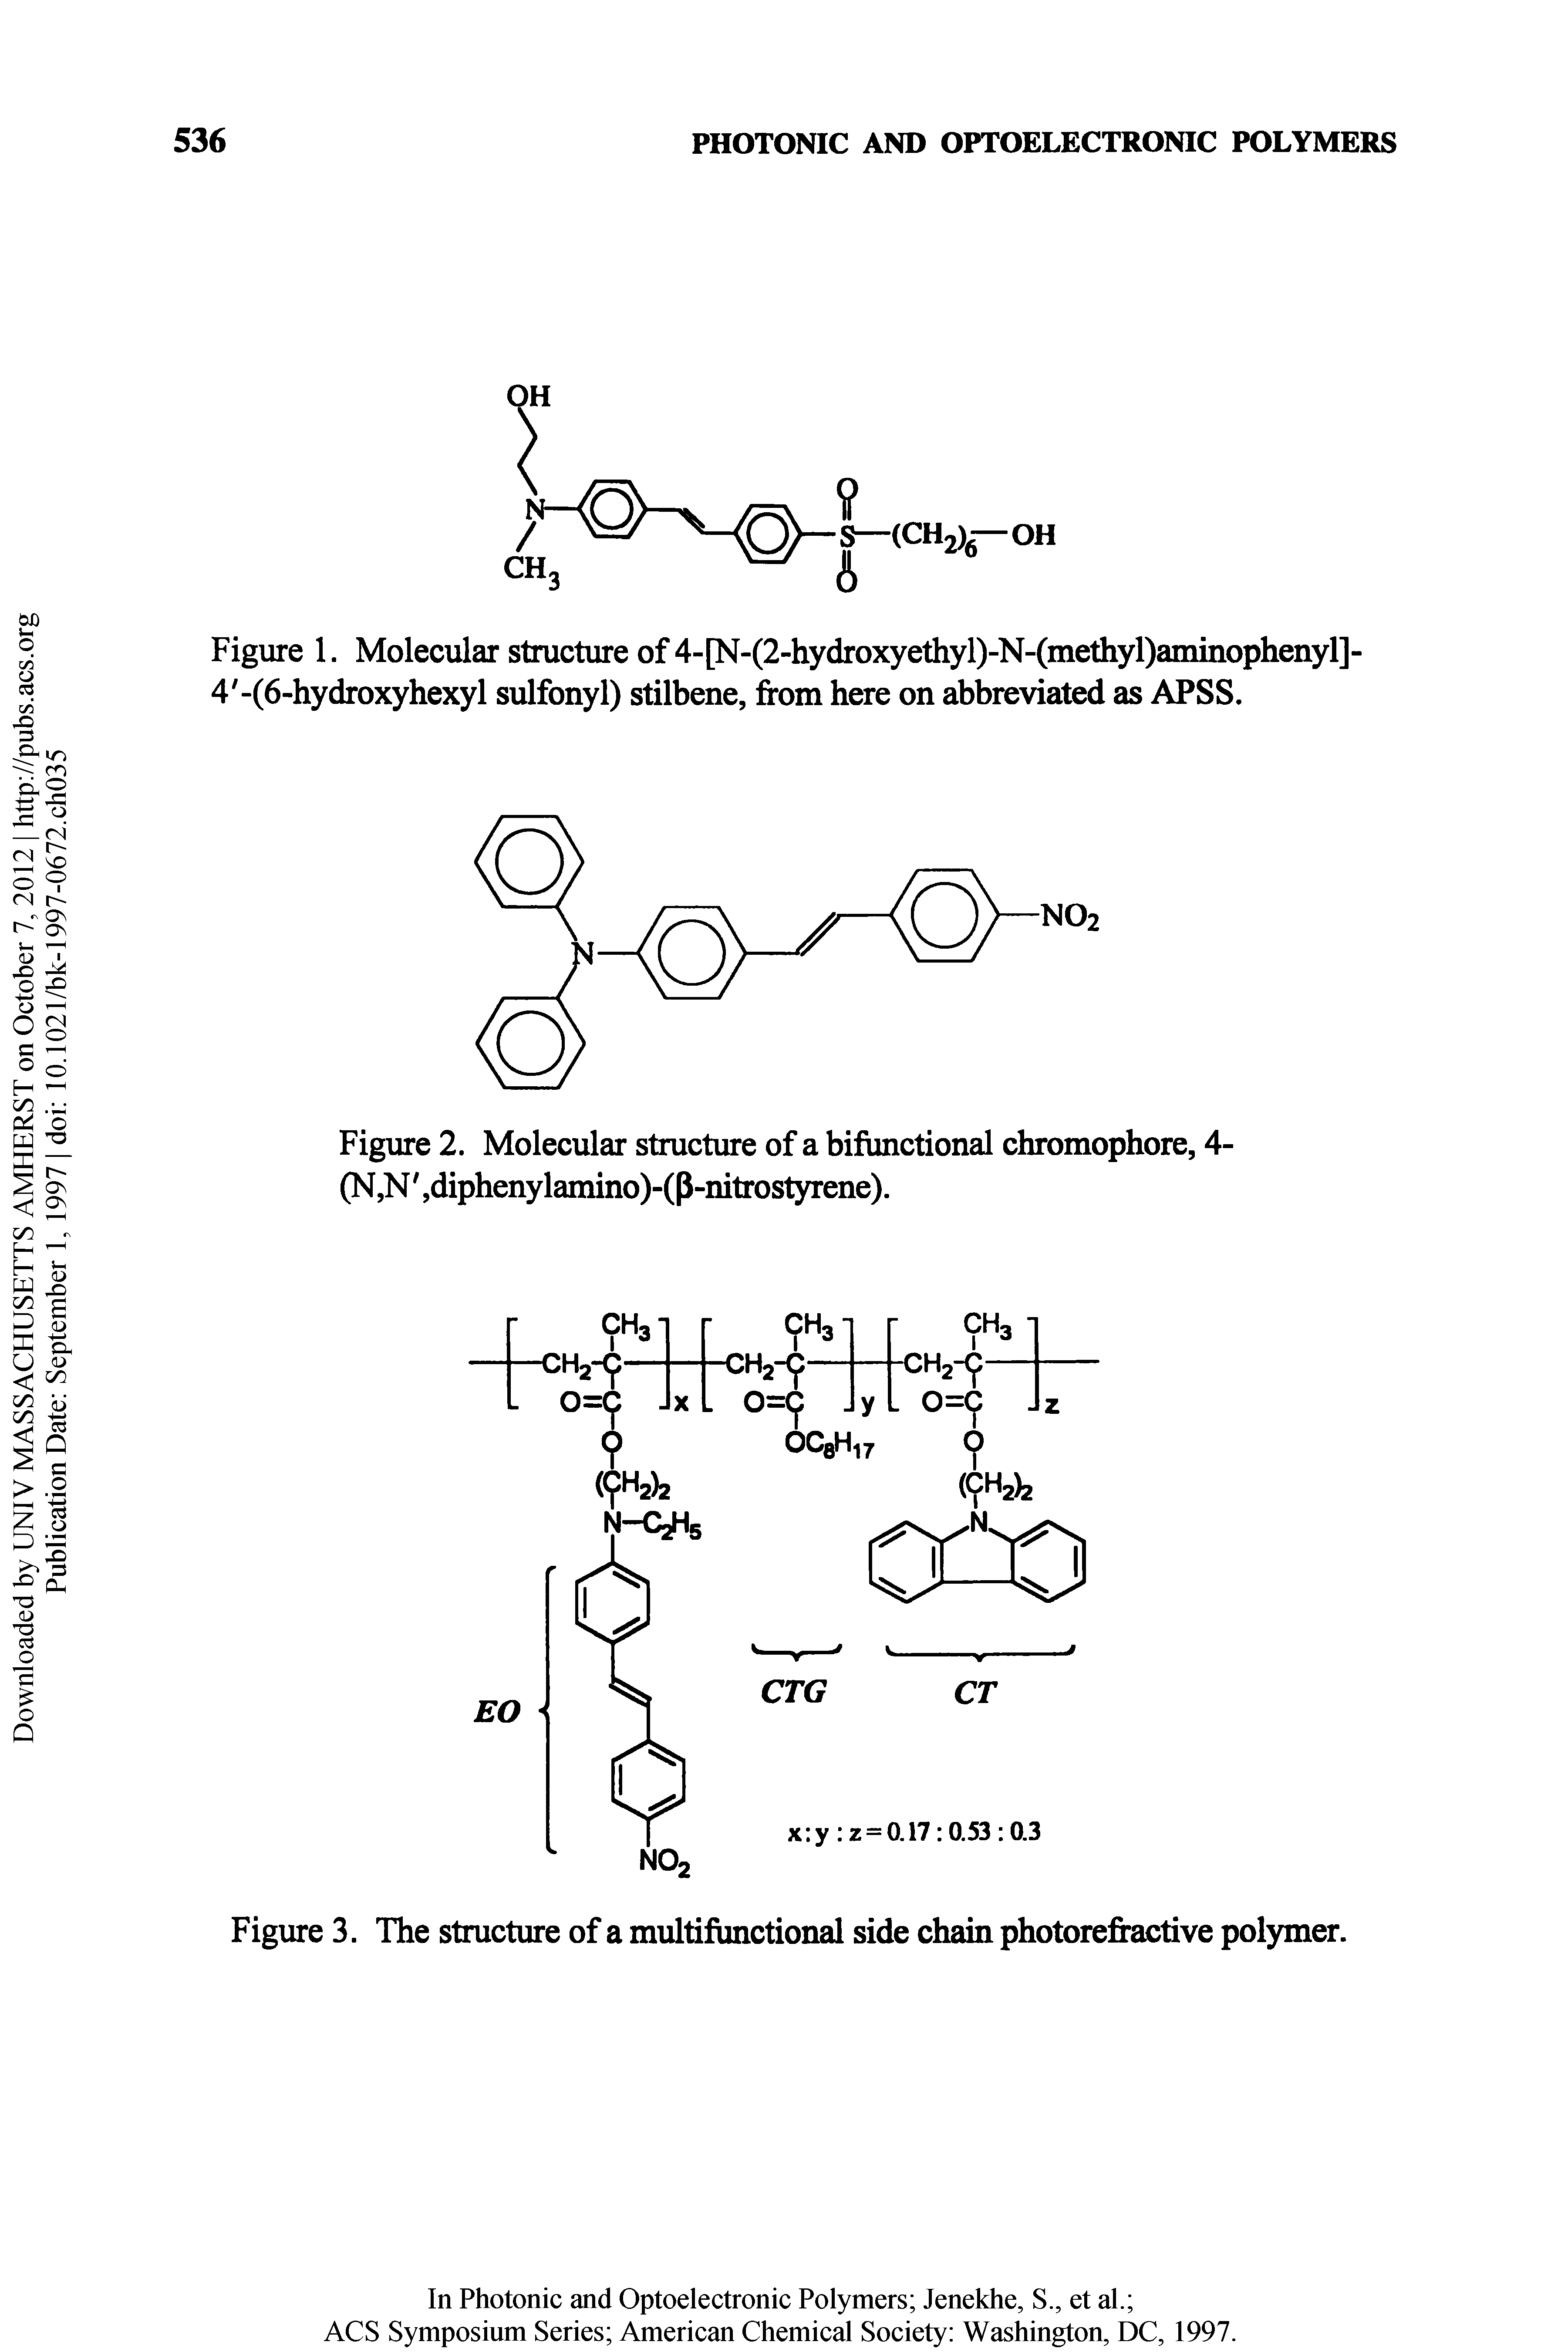 Figure 2. Molecular structure of a bifunctional chromophore, 4-(N,N jdipheny lamino)-(P-nitrostyrene).